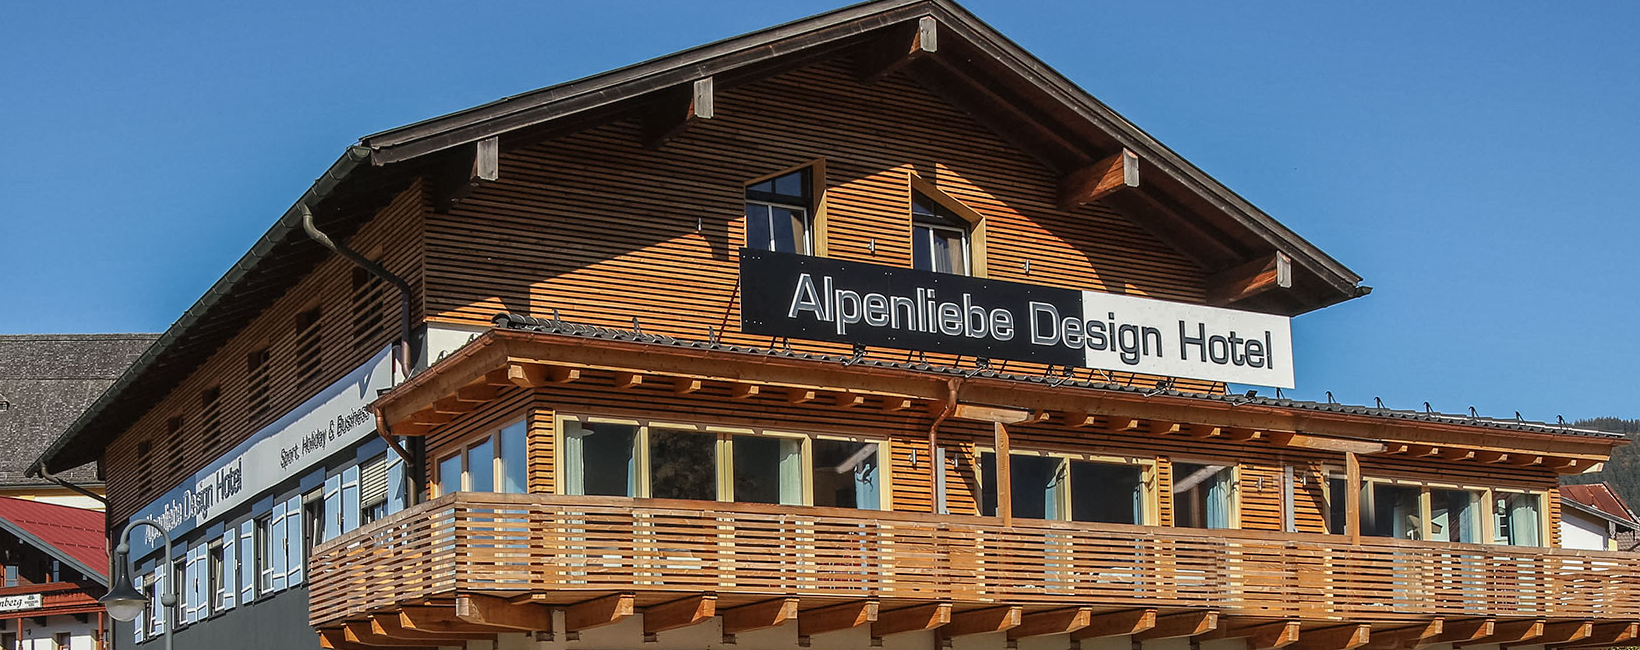 Alpenliebe Banner Overlay